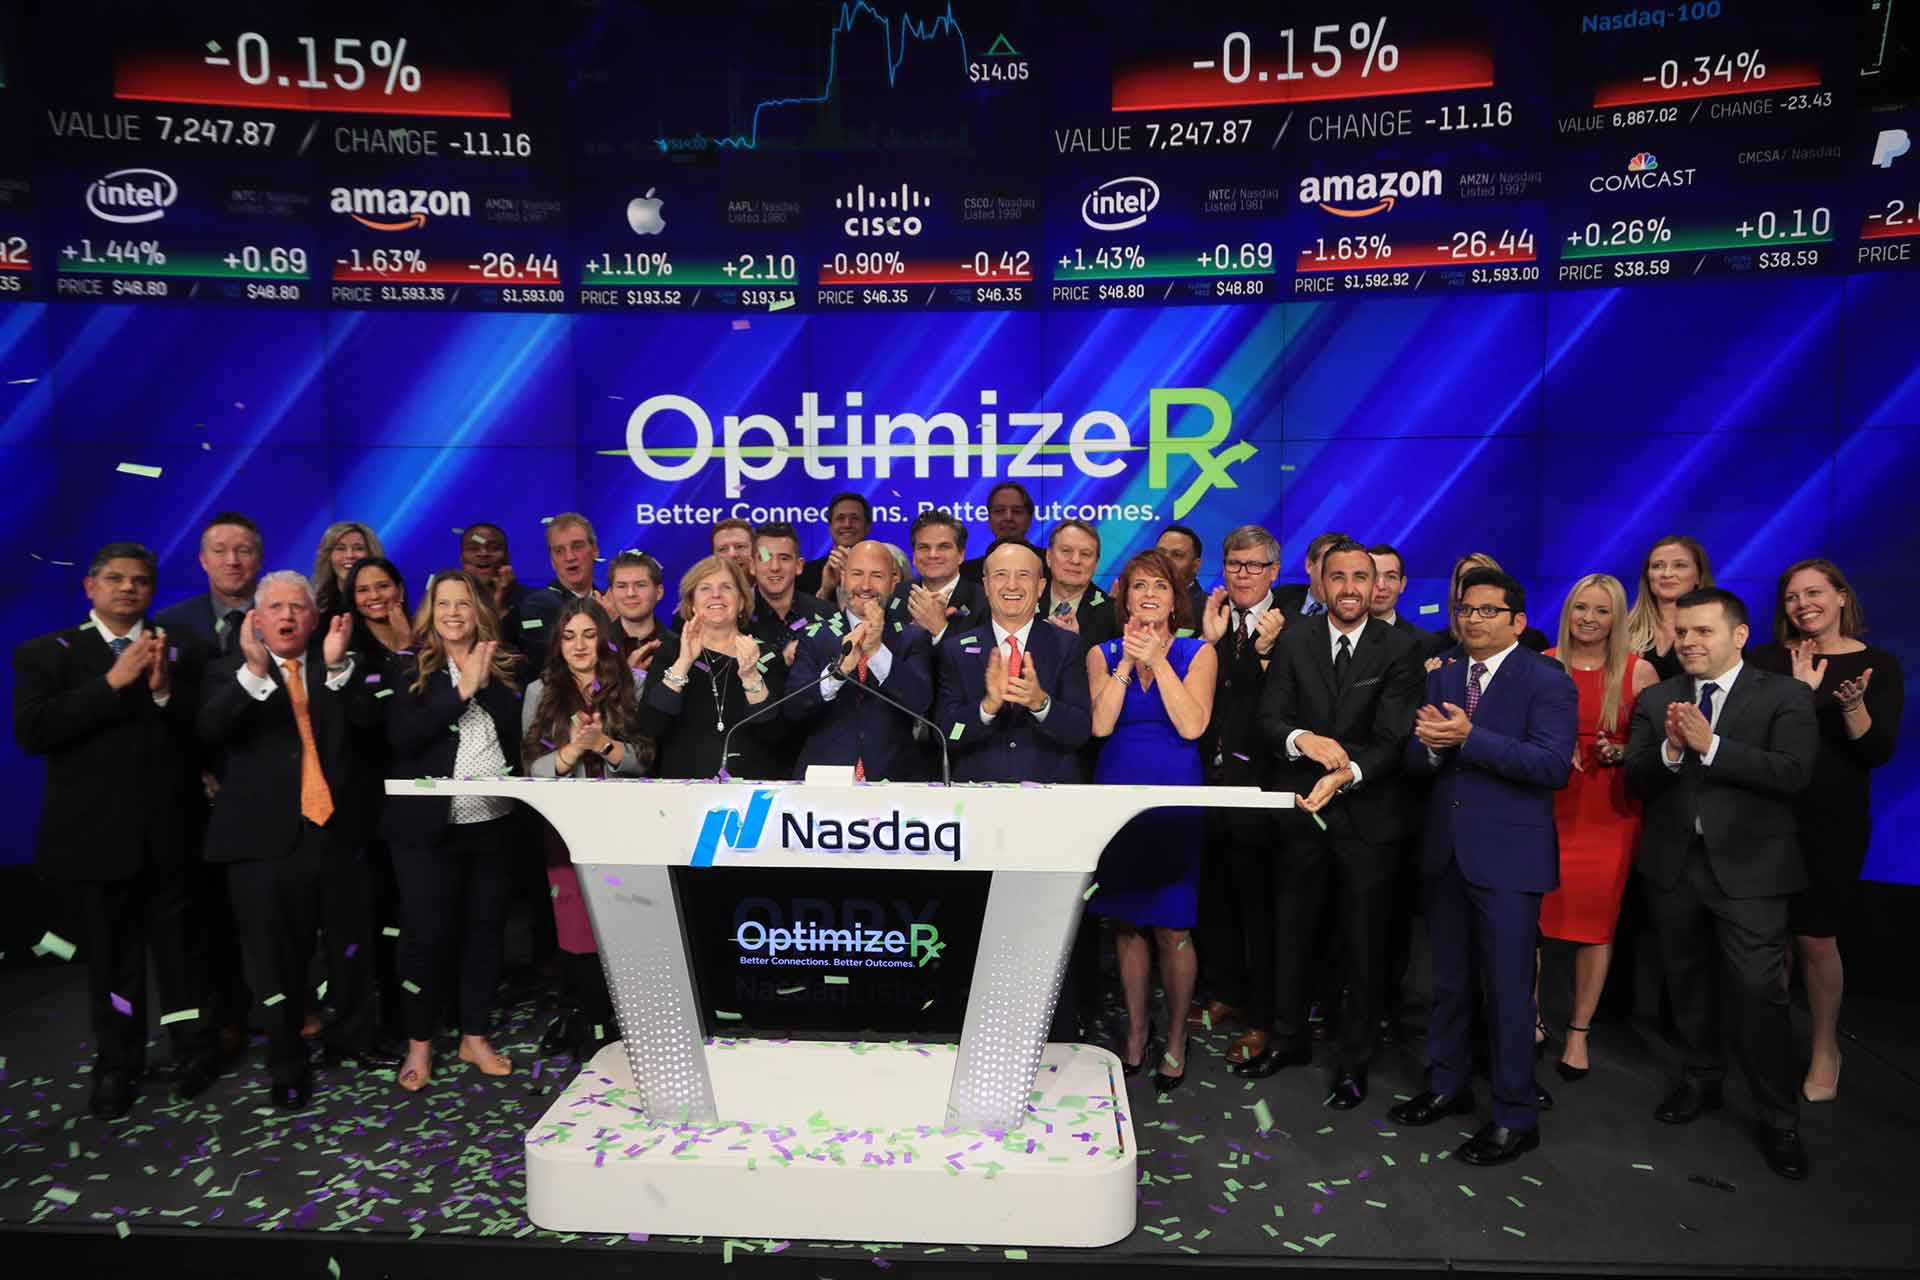 OptimizeRx team in NASDAQ ringing the bell